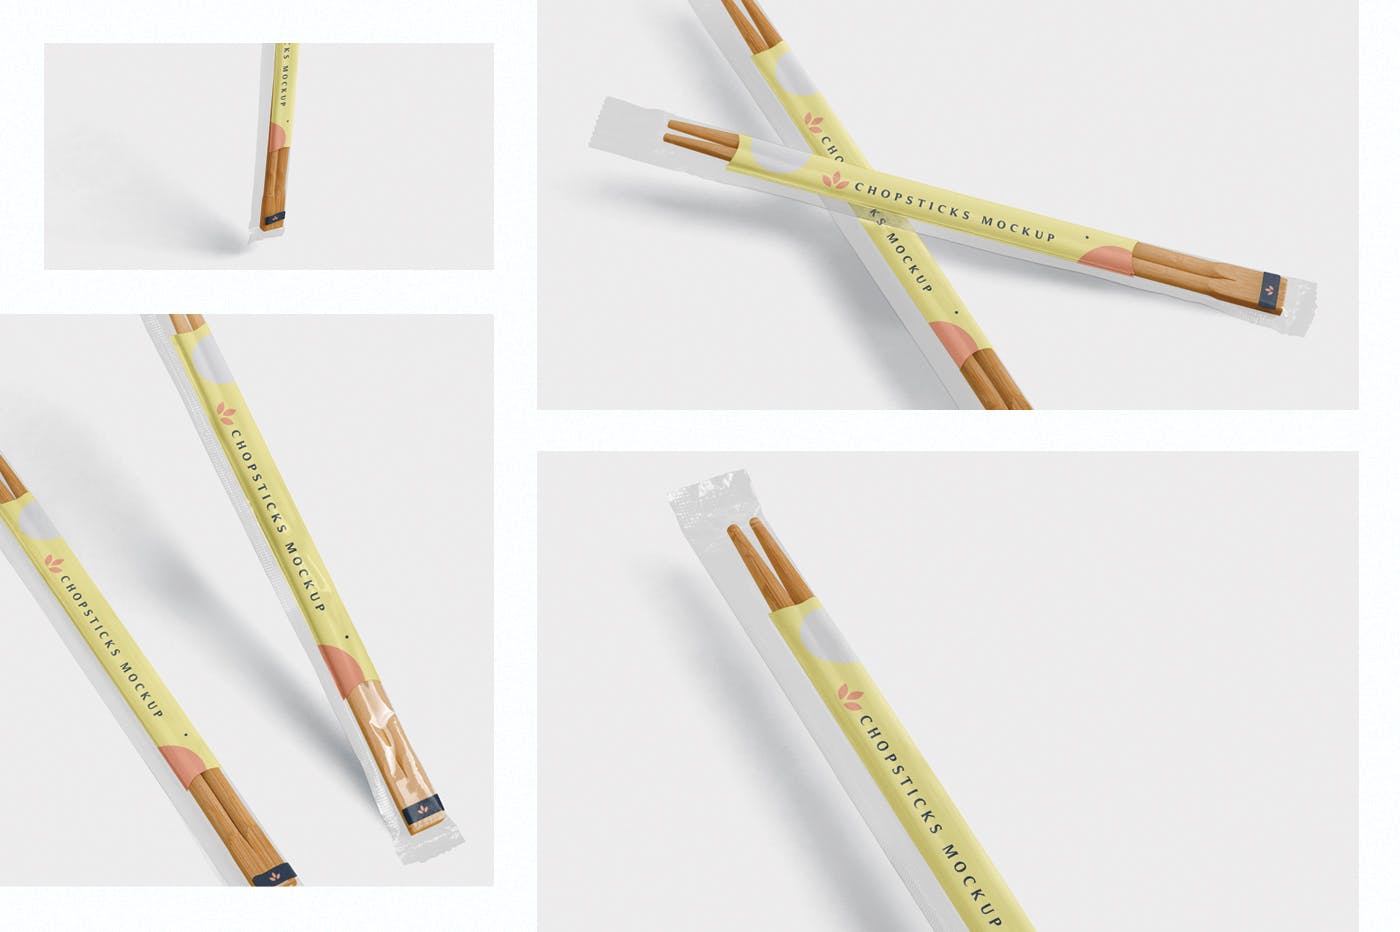 筷子透明包装设计效果图样机 Chopsticks Mockup in Transparent Packaging插图(1)